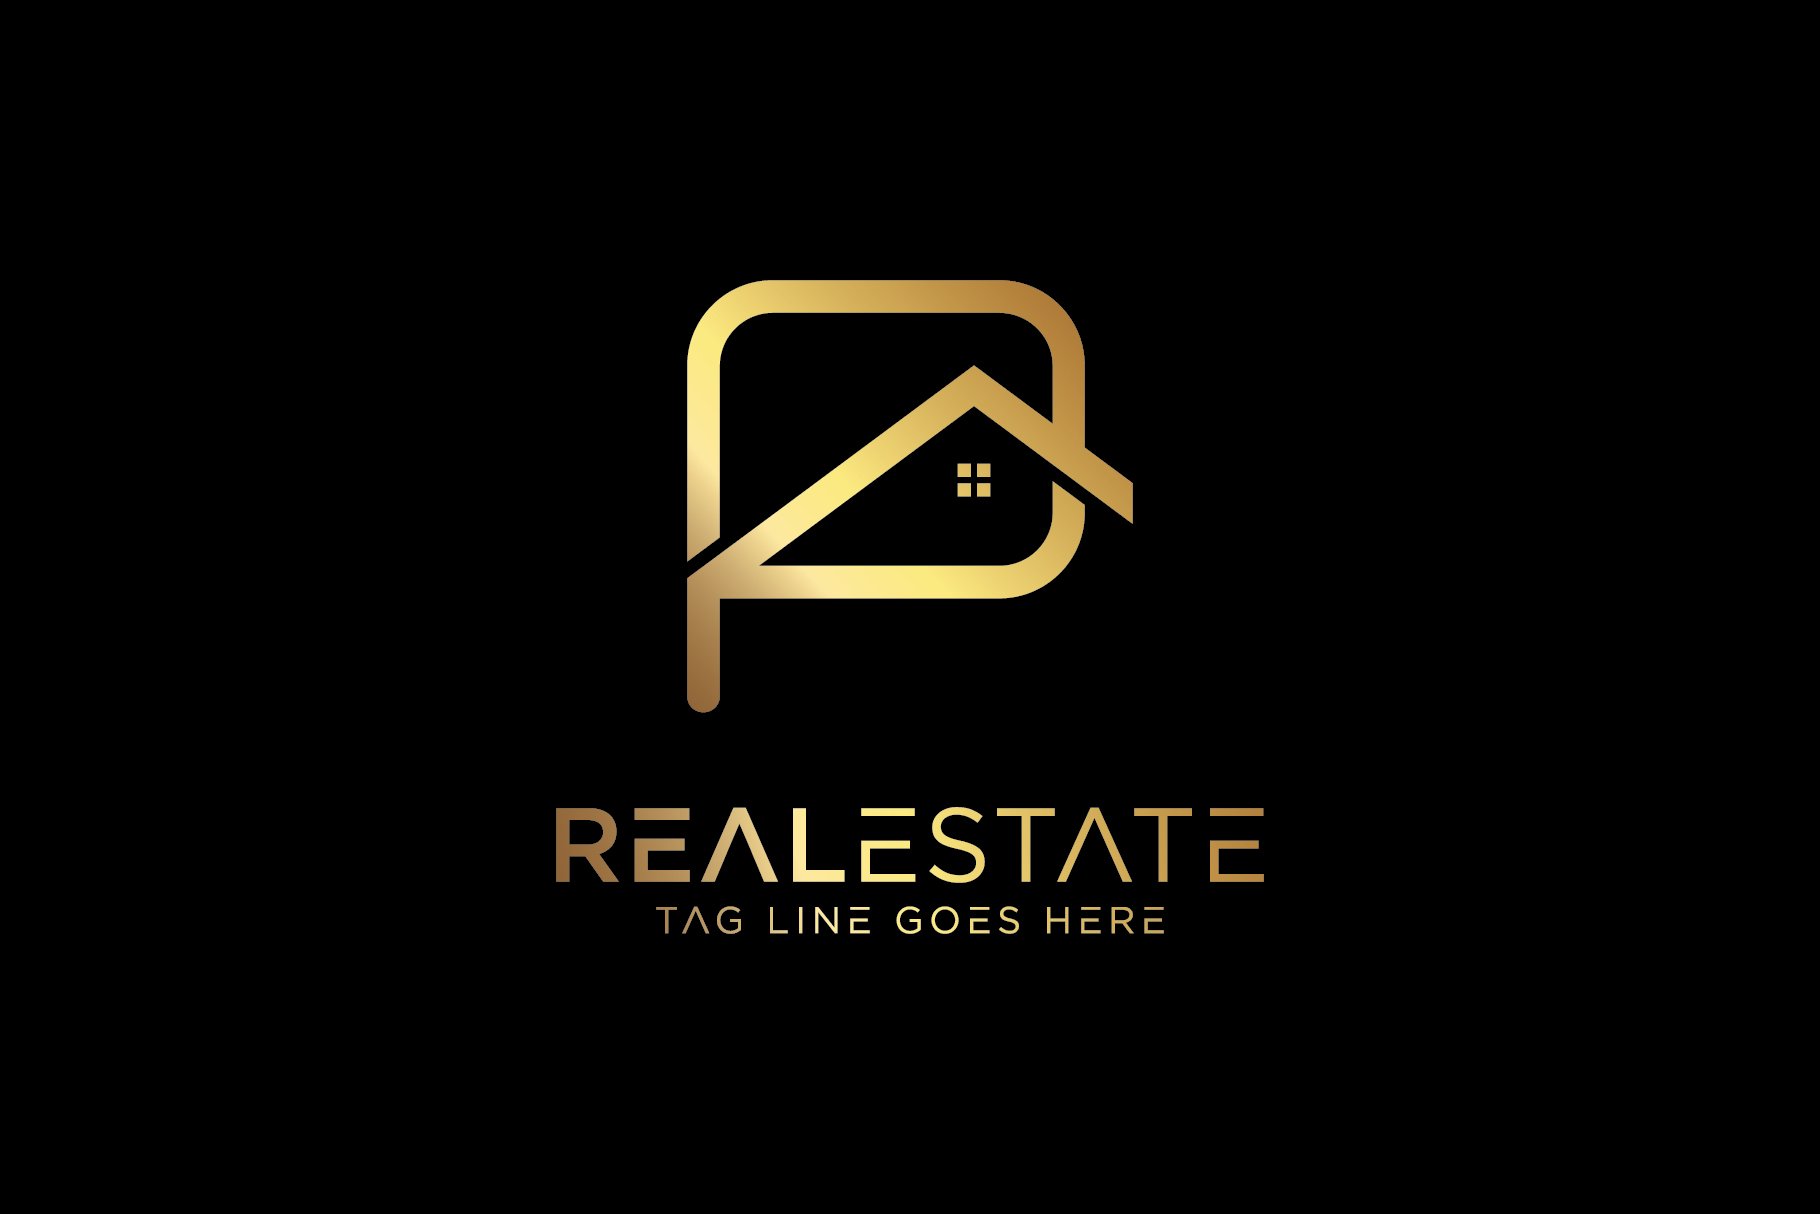 Real Estate P Logo cover image.